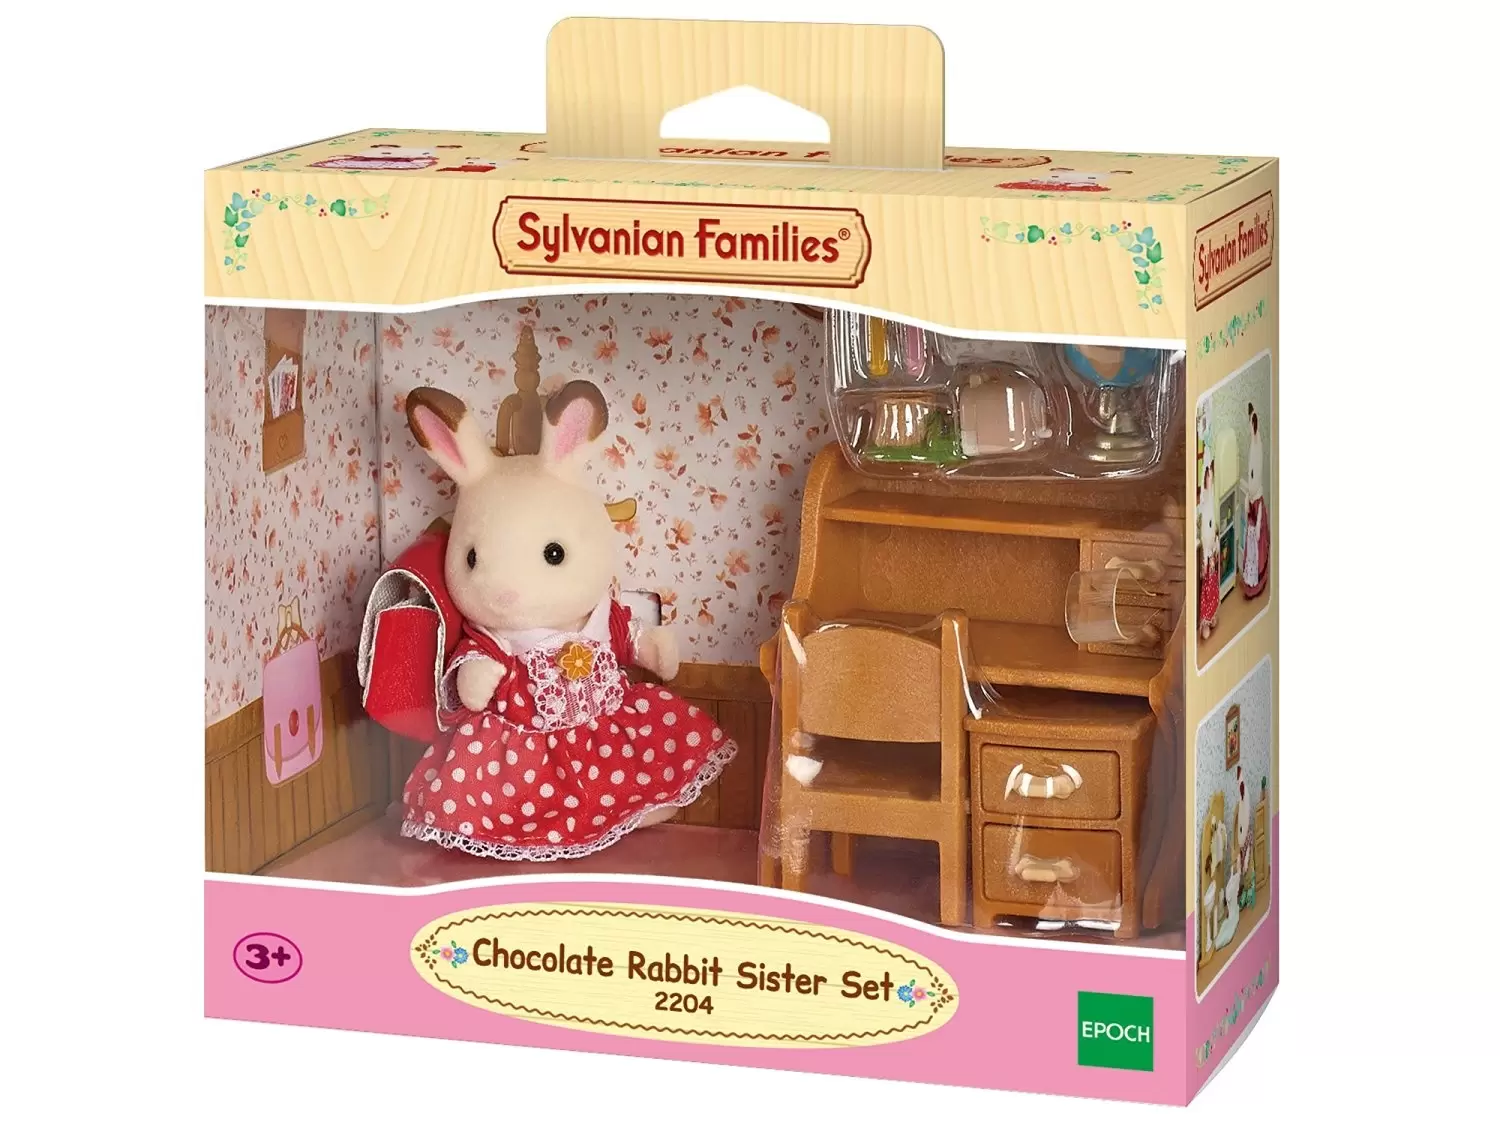 Sylvanian Families (Europe) - Chocolate Rabbit Sister Set / Desk